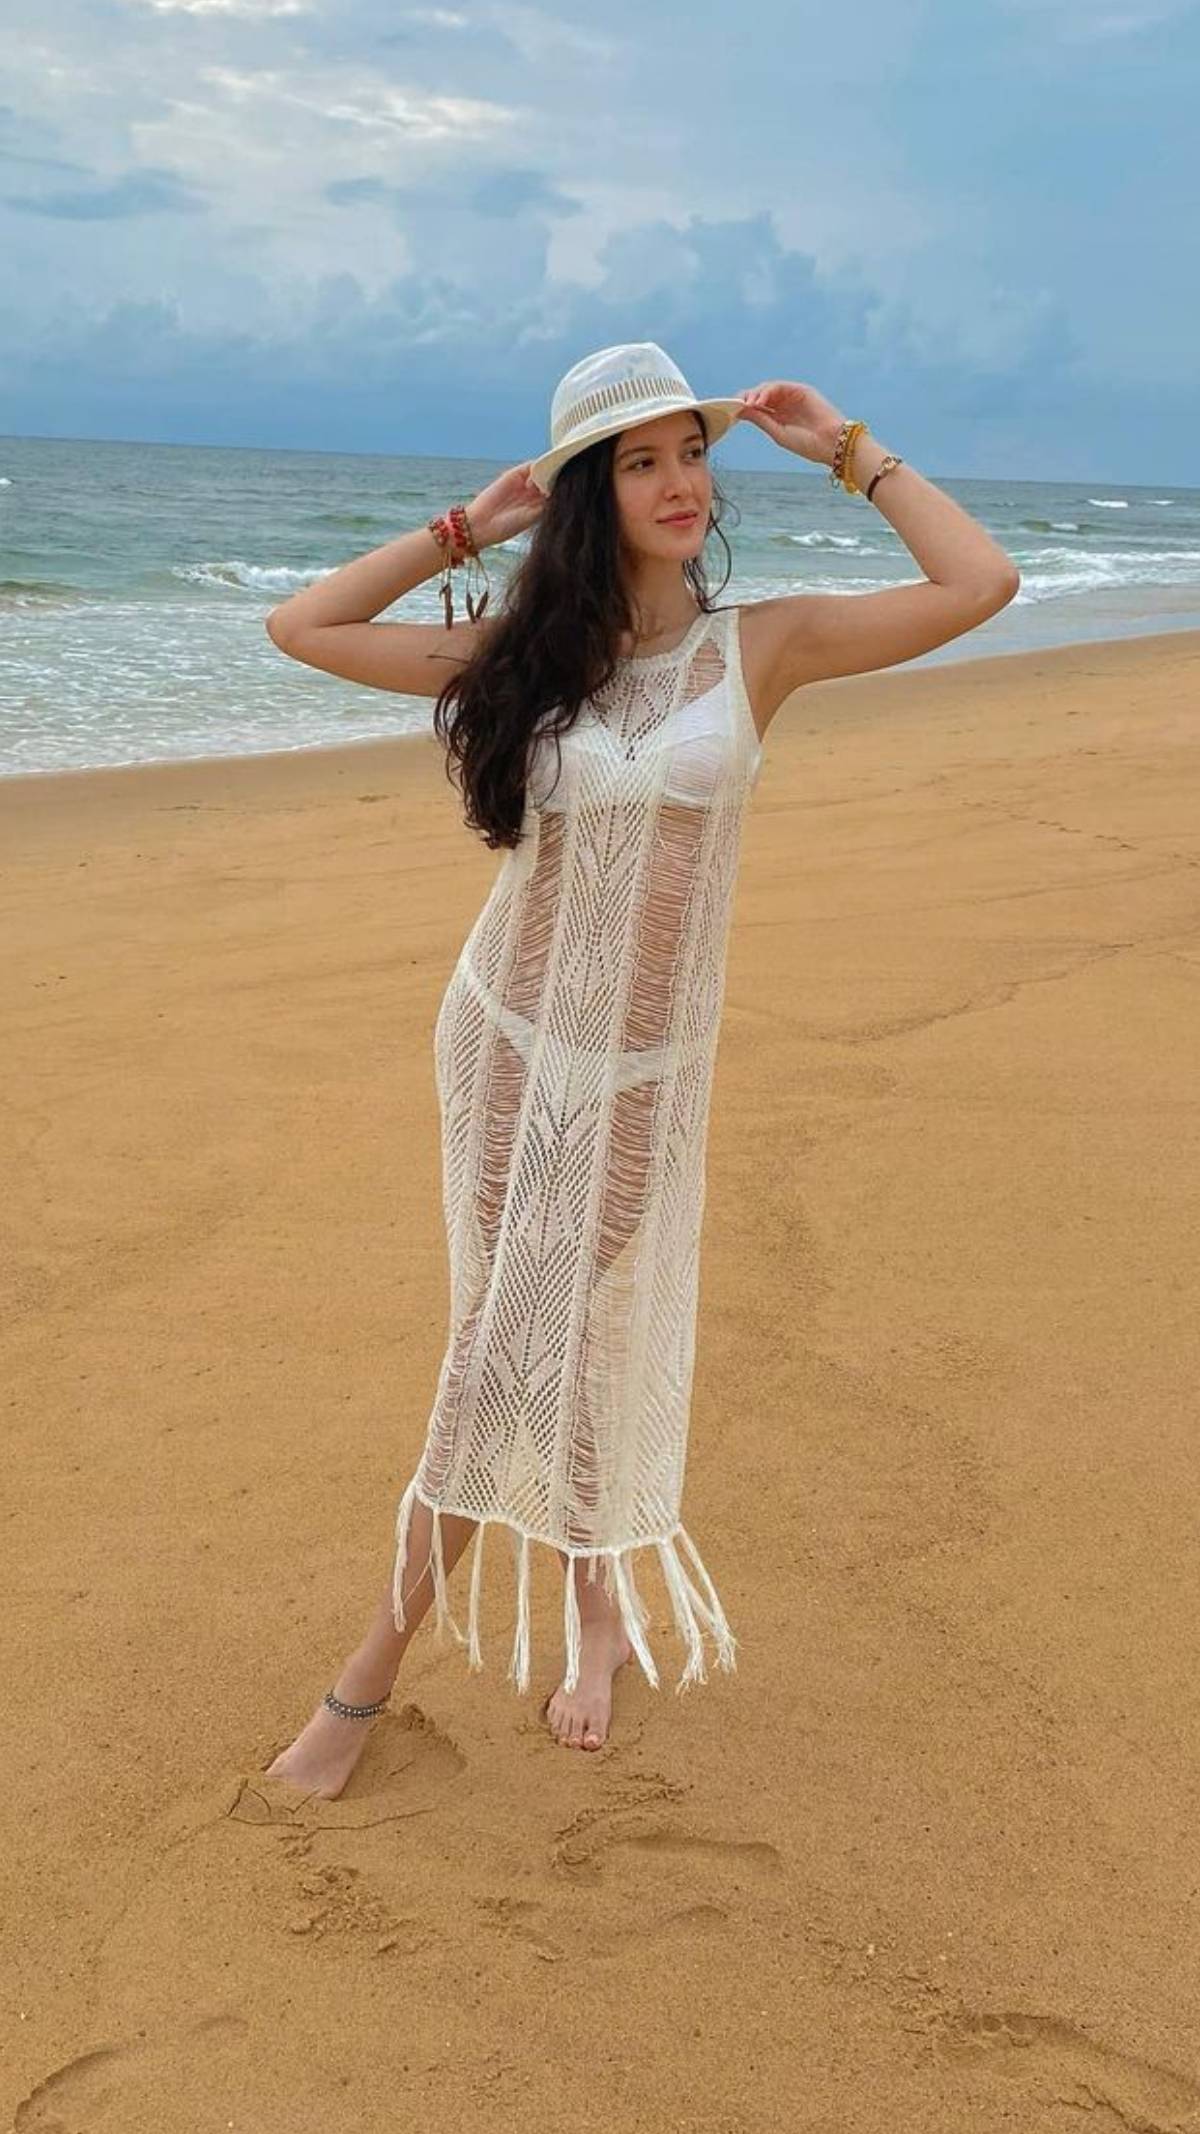 Shanaya Kapoor looks super sexy in the white bikini and the lace overlay.